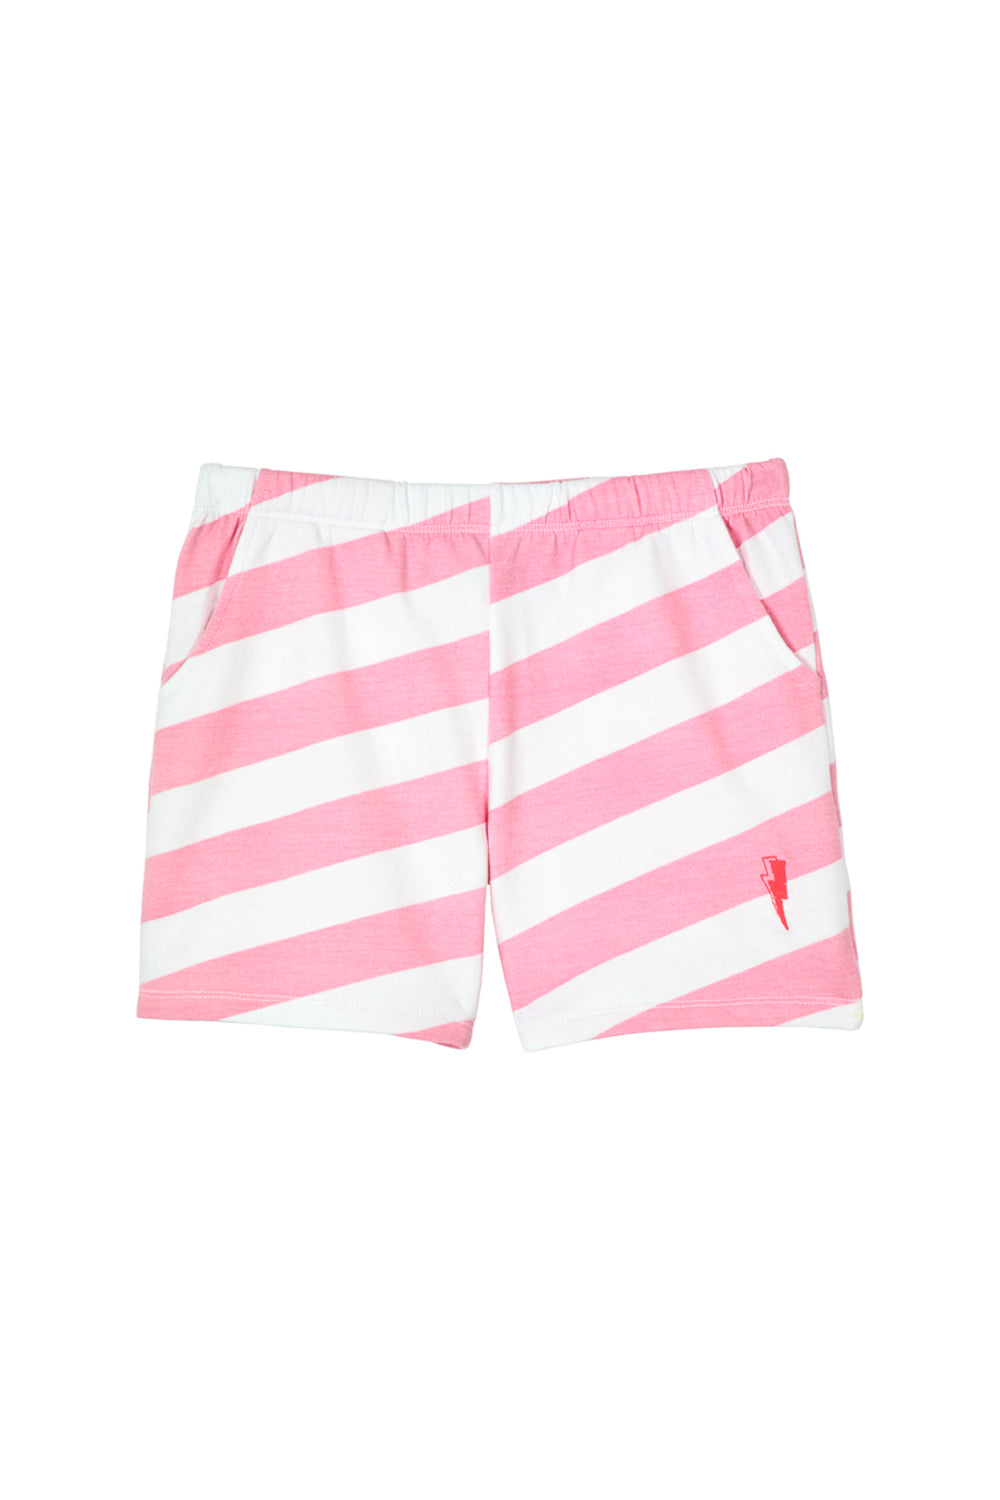 Kids Pink and White Stripe Shorts